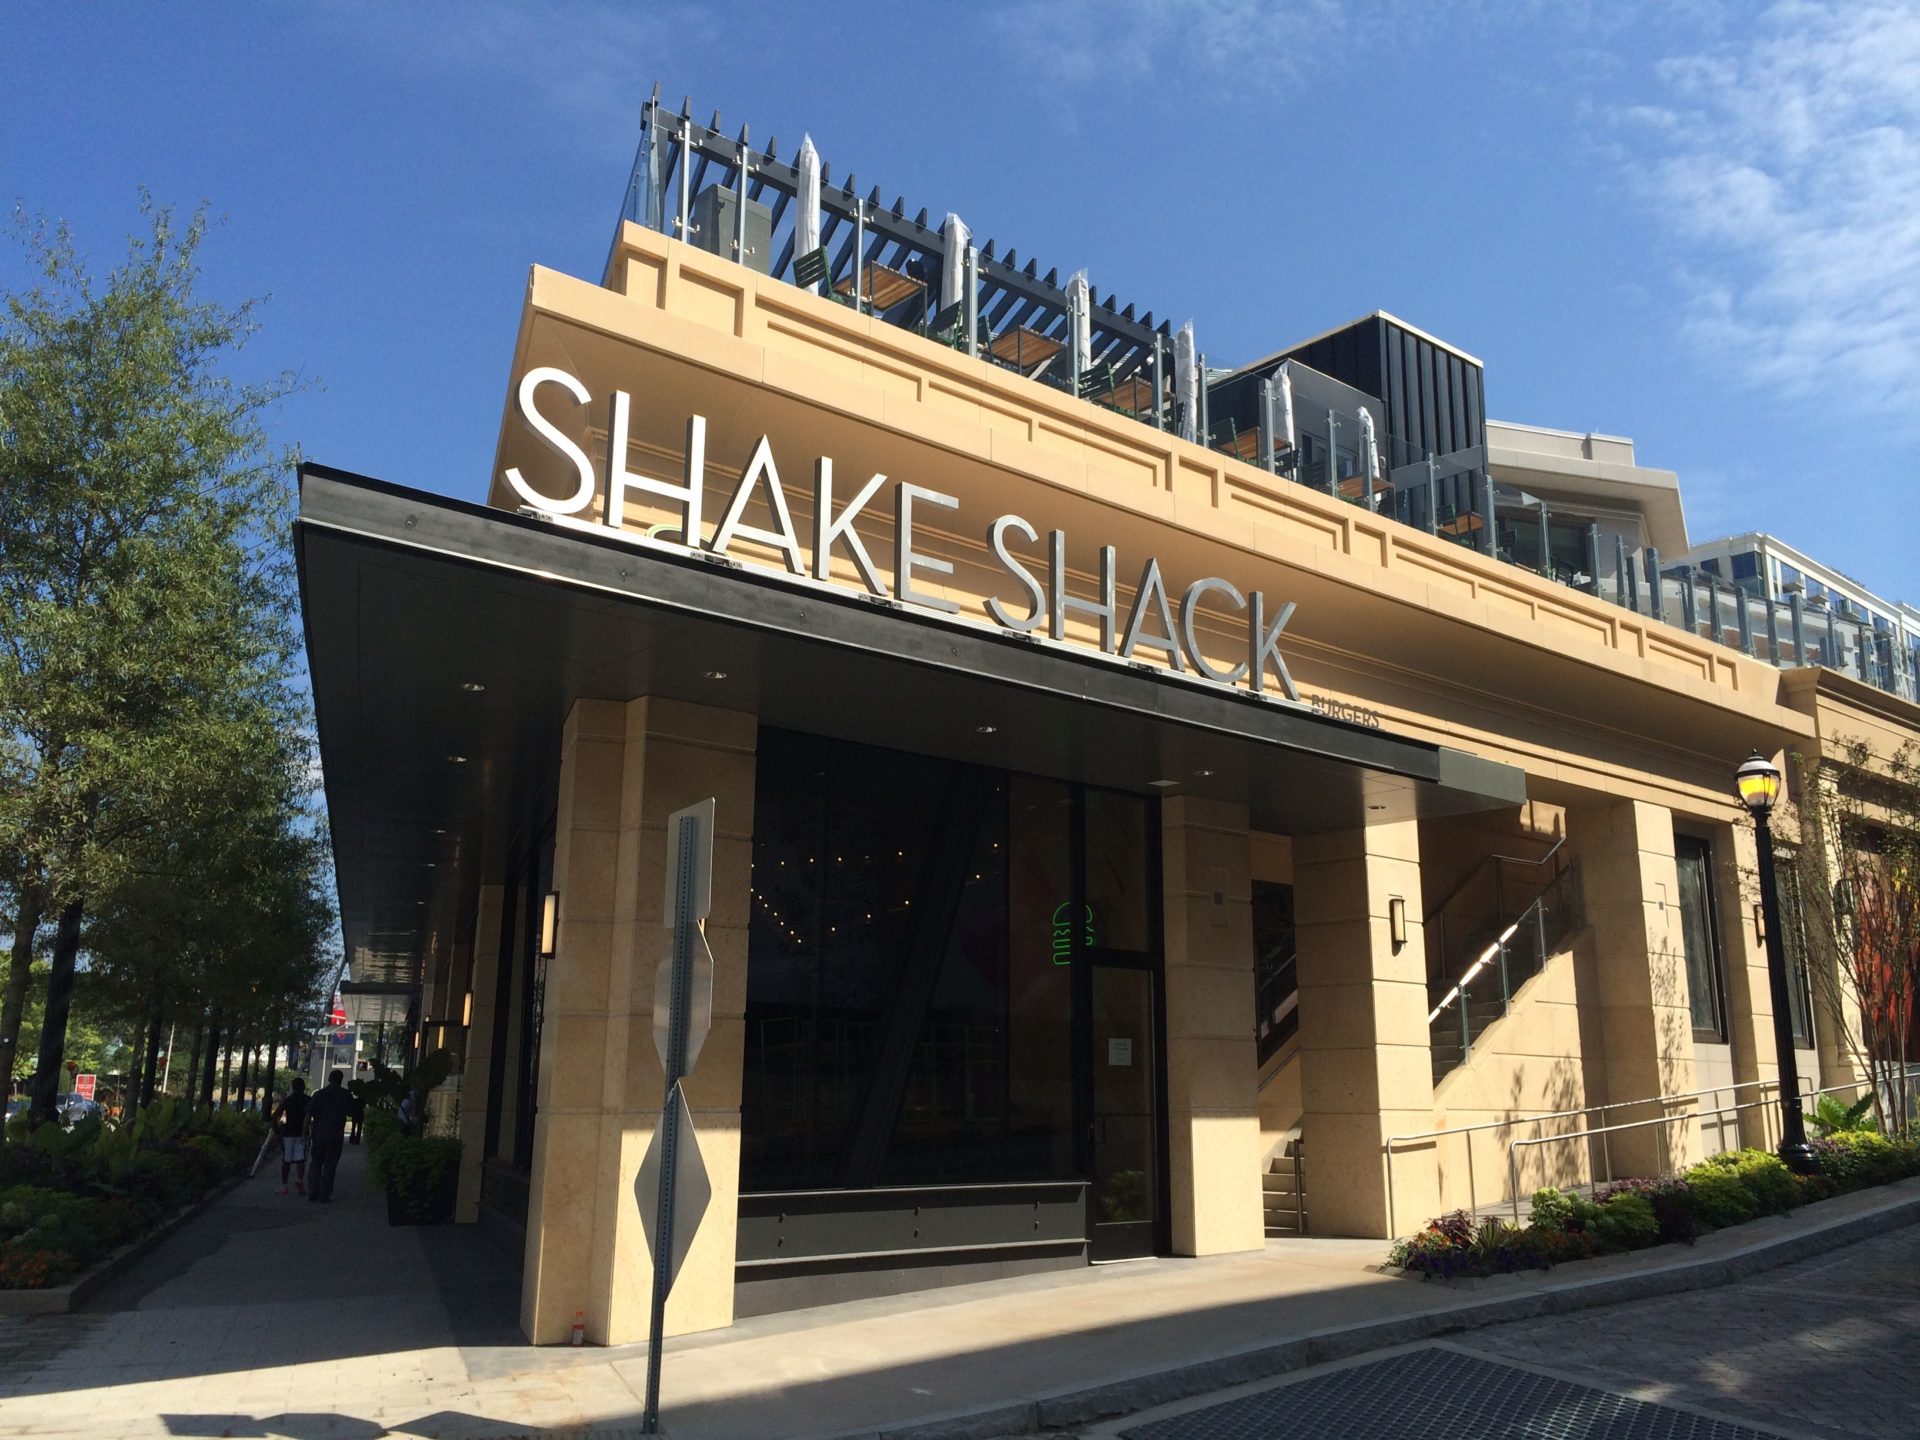 seamless shake shack